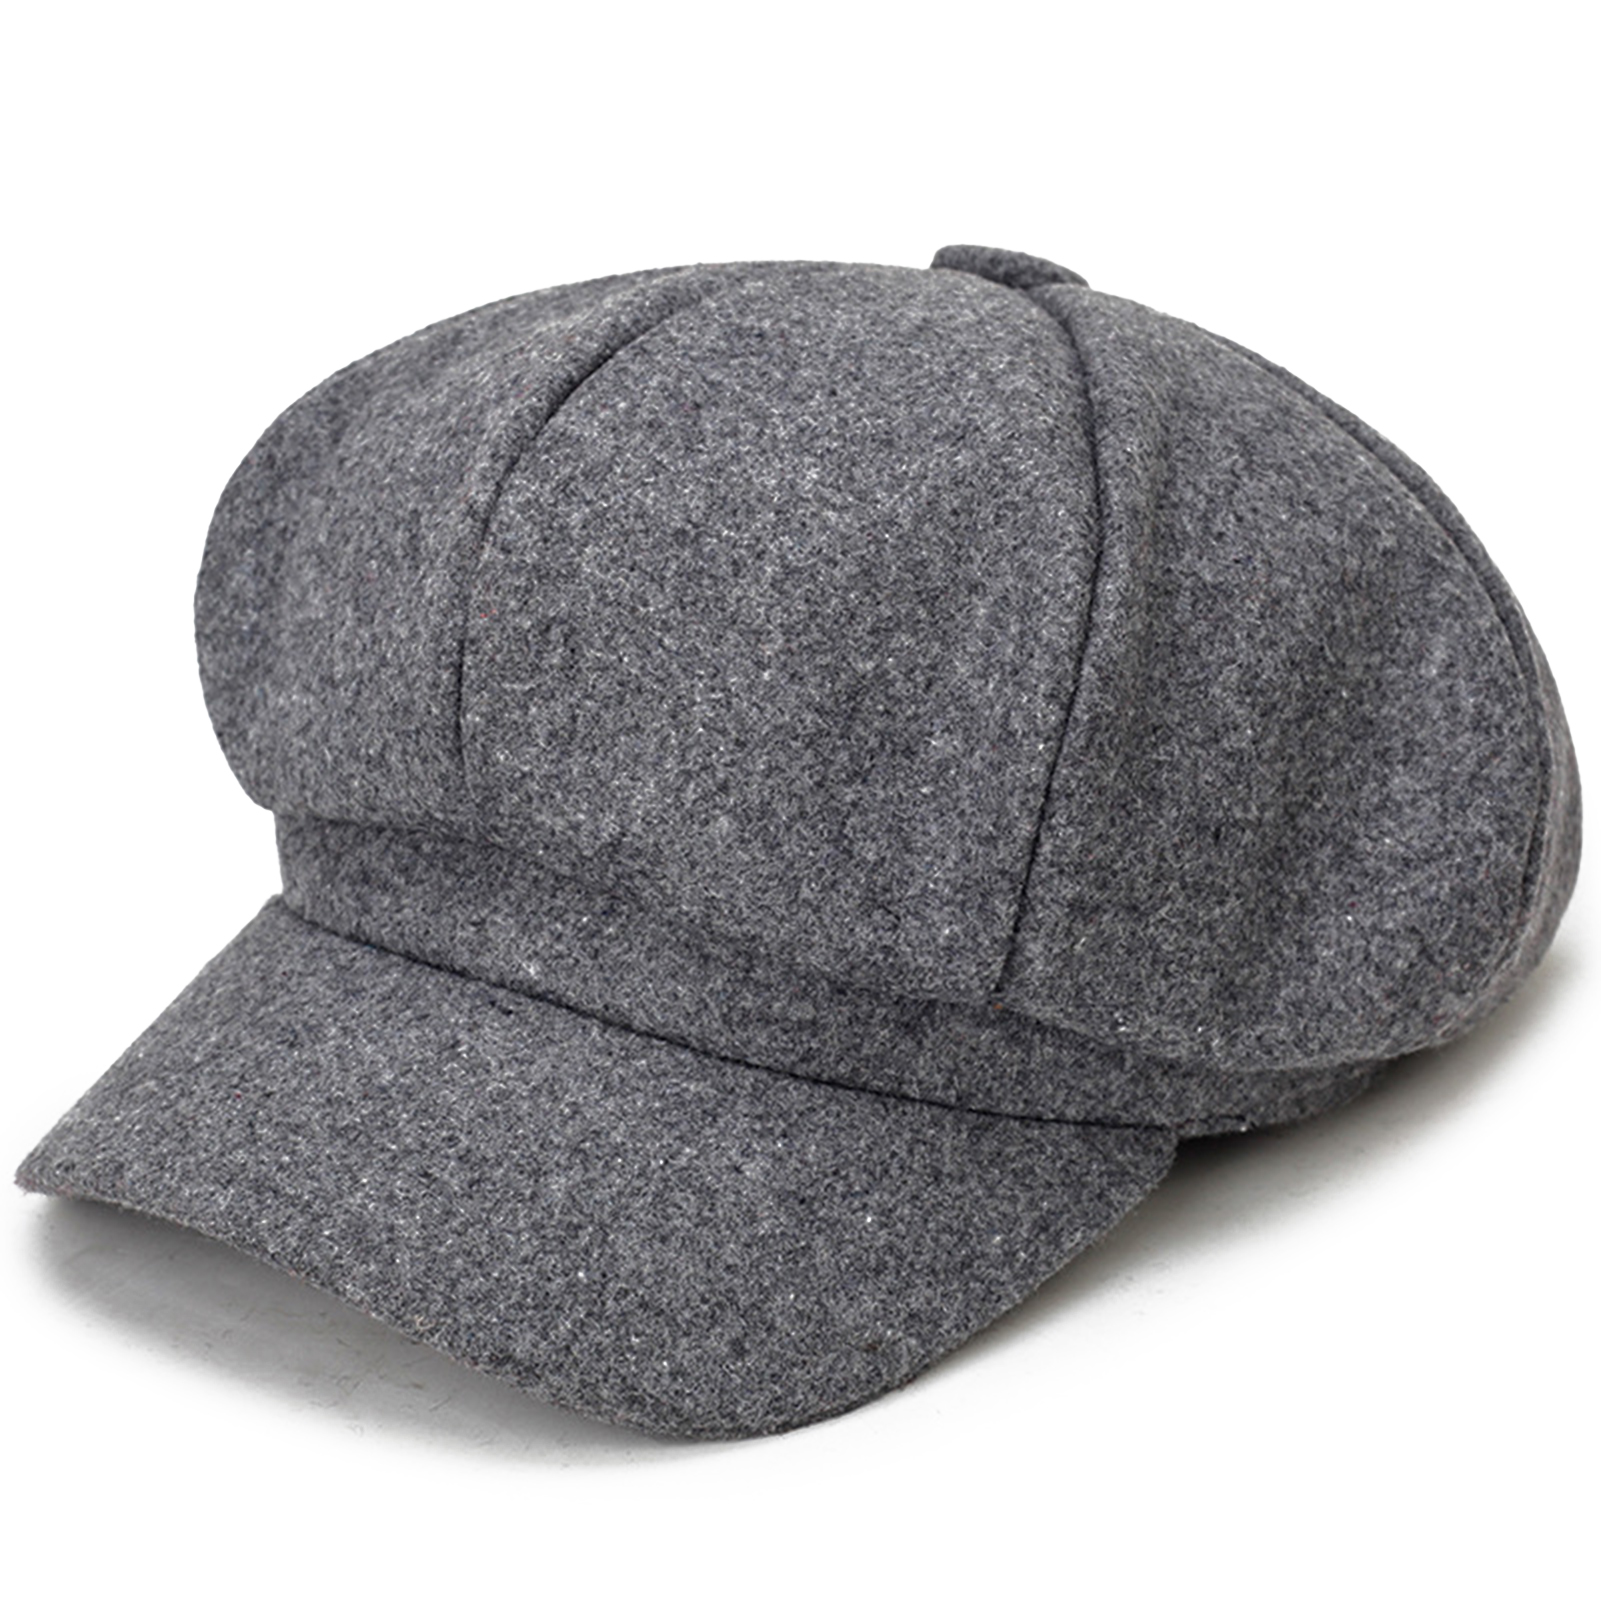 Vintage Women's Men's Woolen Octagonal Cap Newsboy Cabbie Cap Casual Beret Hat 